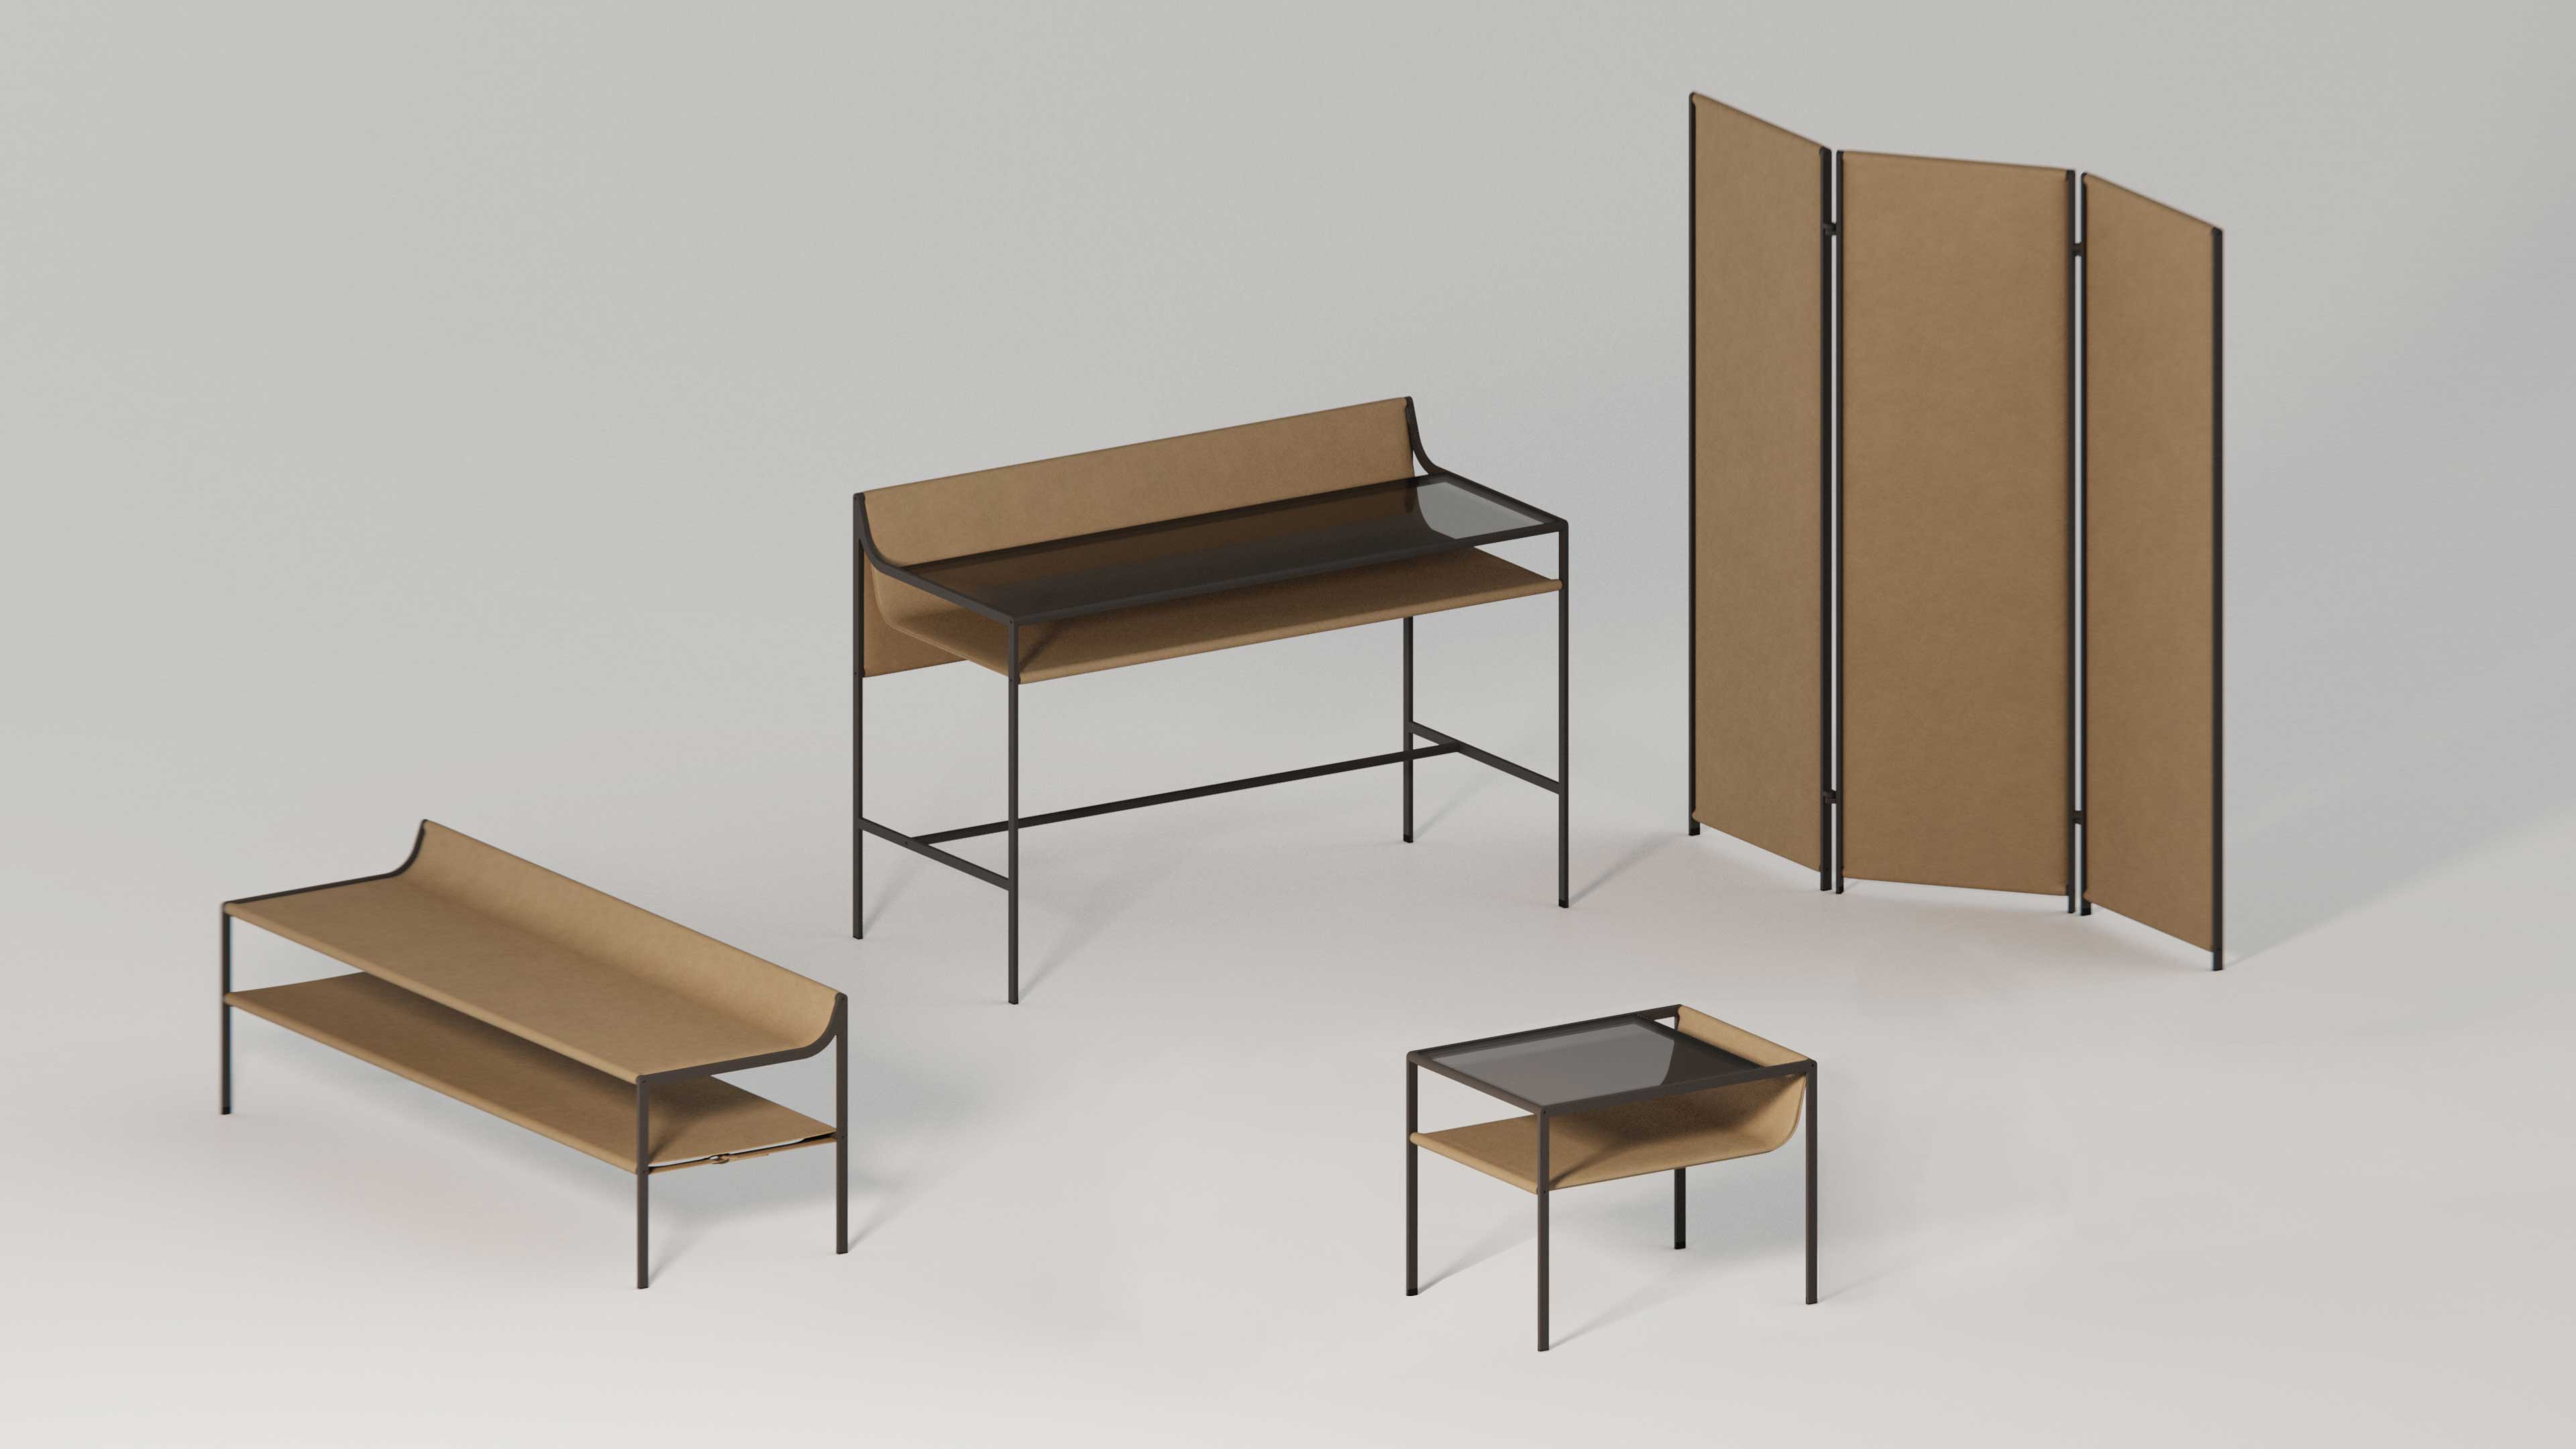 Gabriel Tan's new modular furniture for Herman Miller